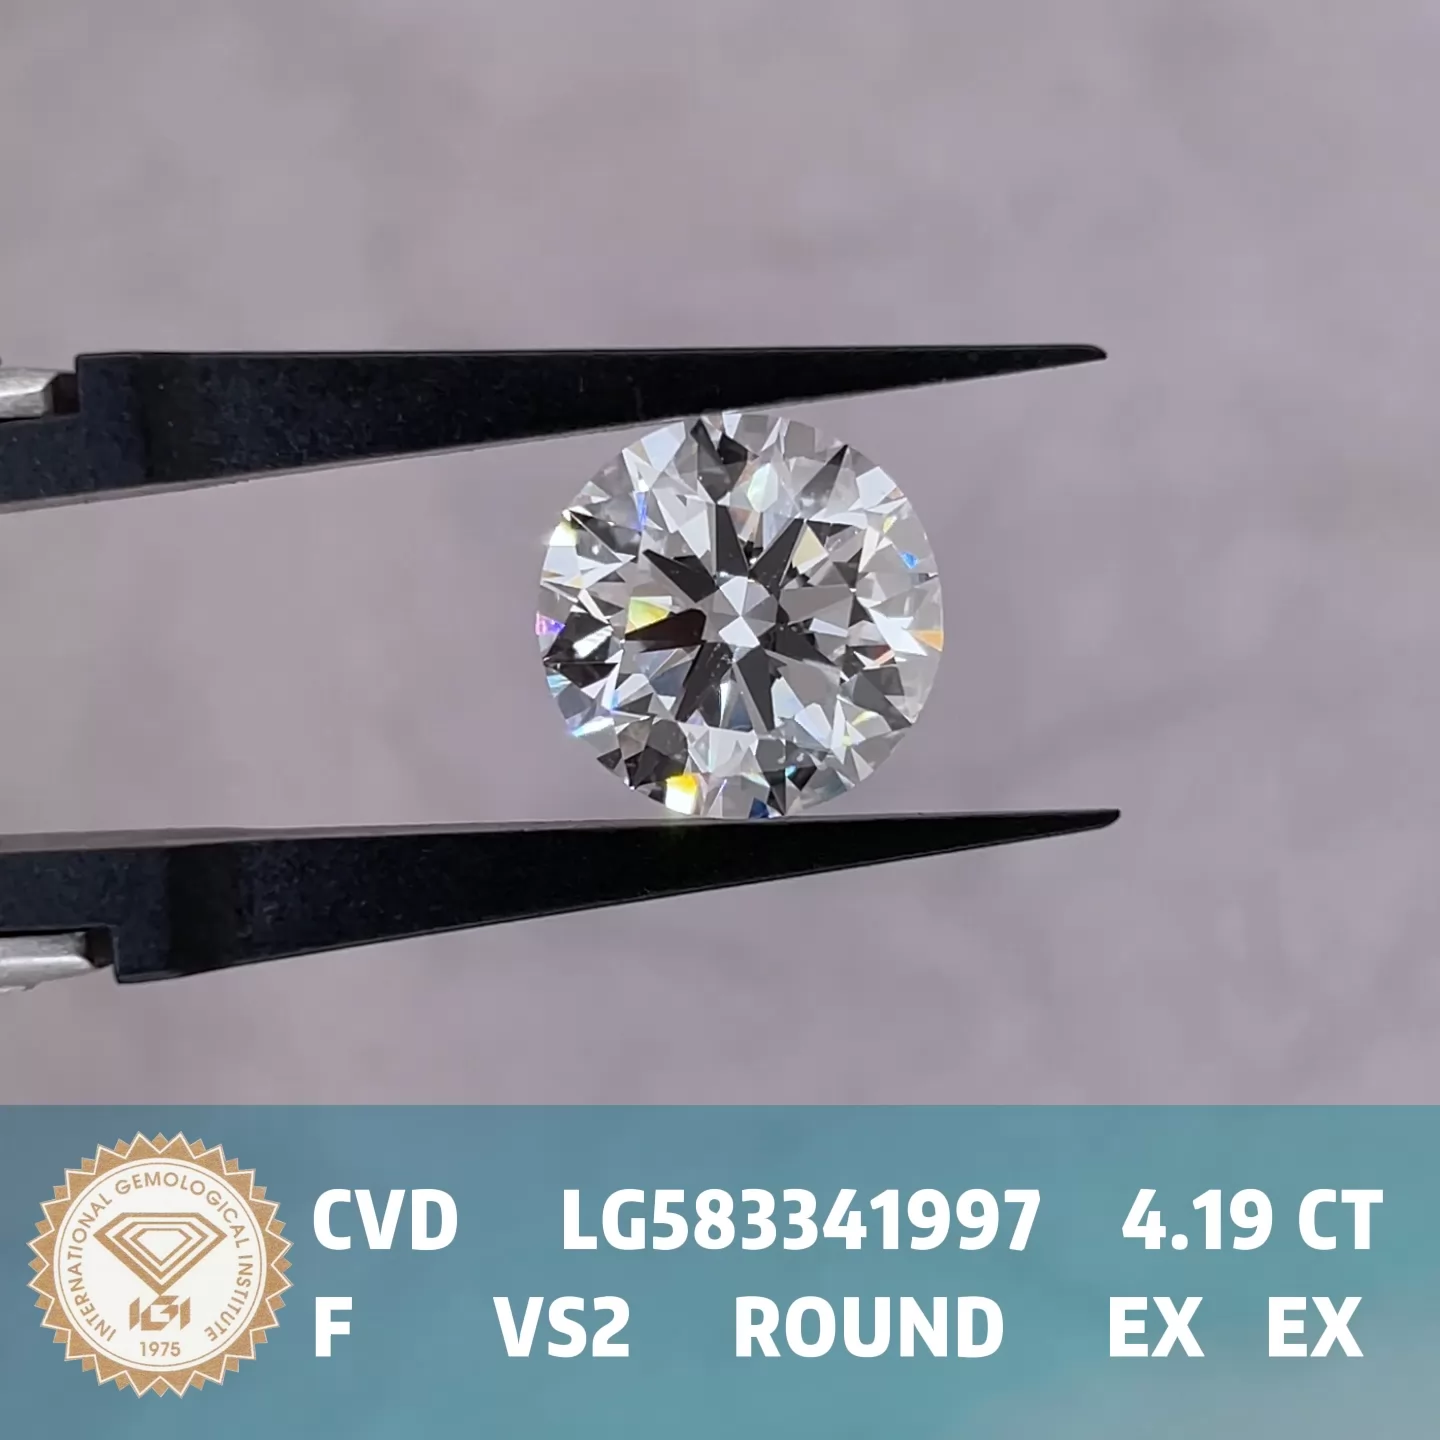 Round Brilliant Cut 4.19ct F Color CVD Lab Grown Diamond